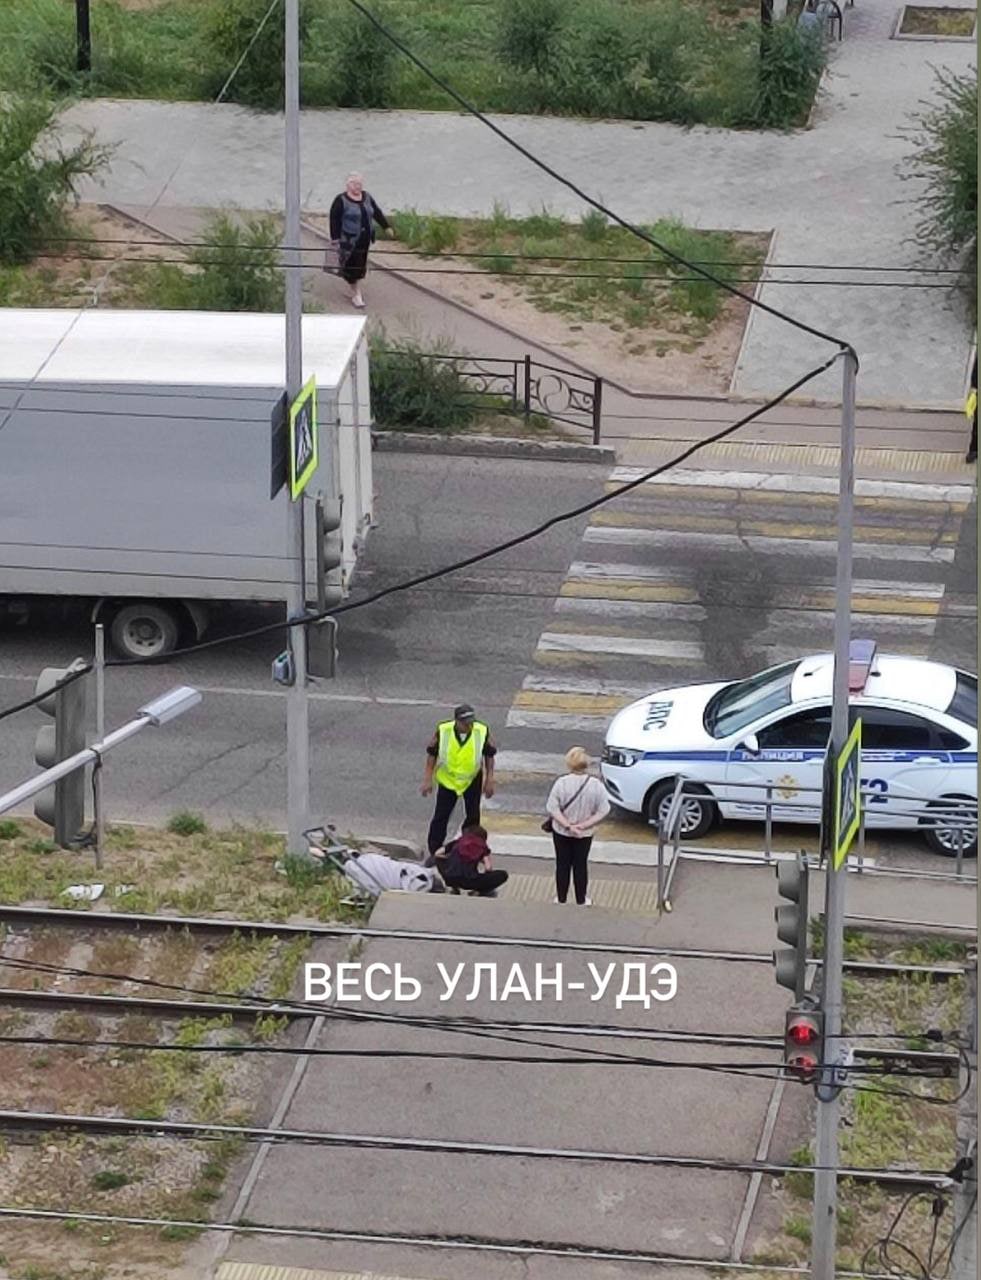 Фото В столице Бурятии трамвай сбил женщину (ДОПОЛНЕНО)